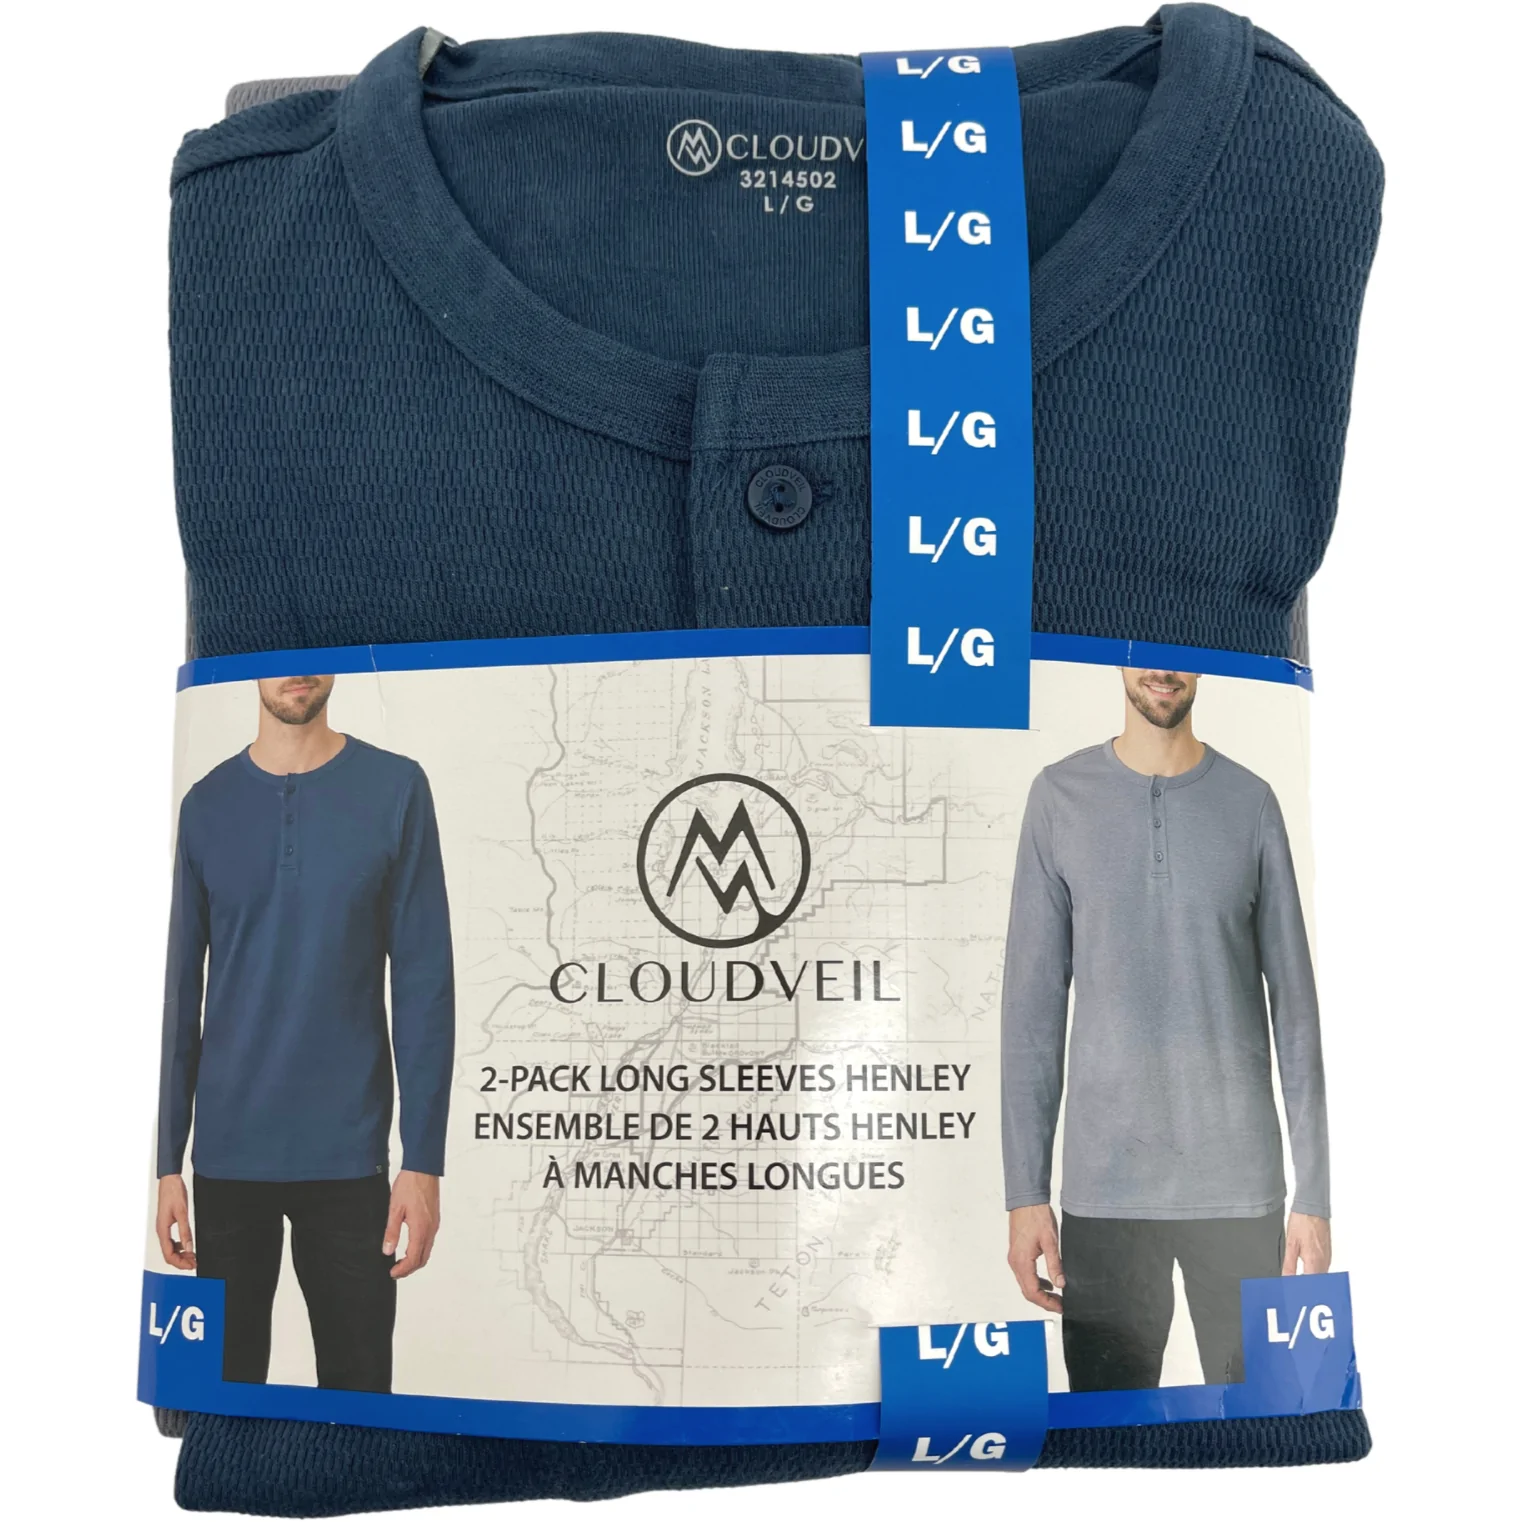 Cloudveil Men's 2 Pack of Long Sleeve Henley Shirts / Blue & Grey